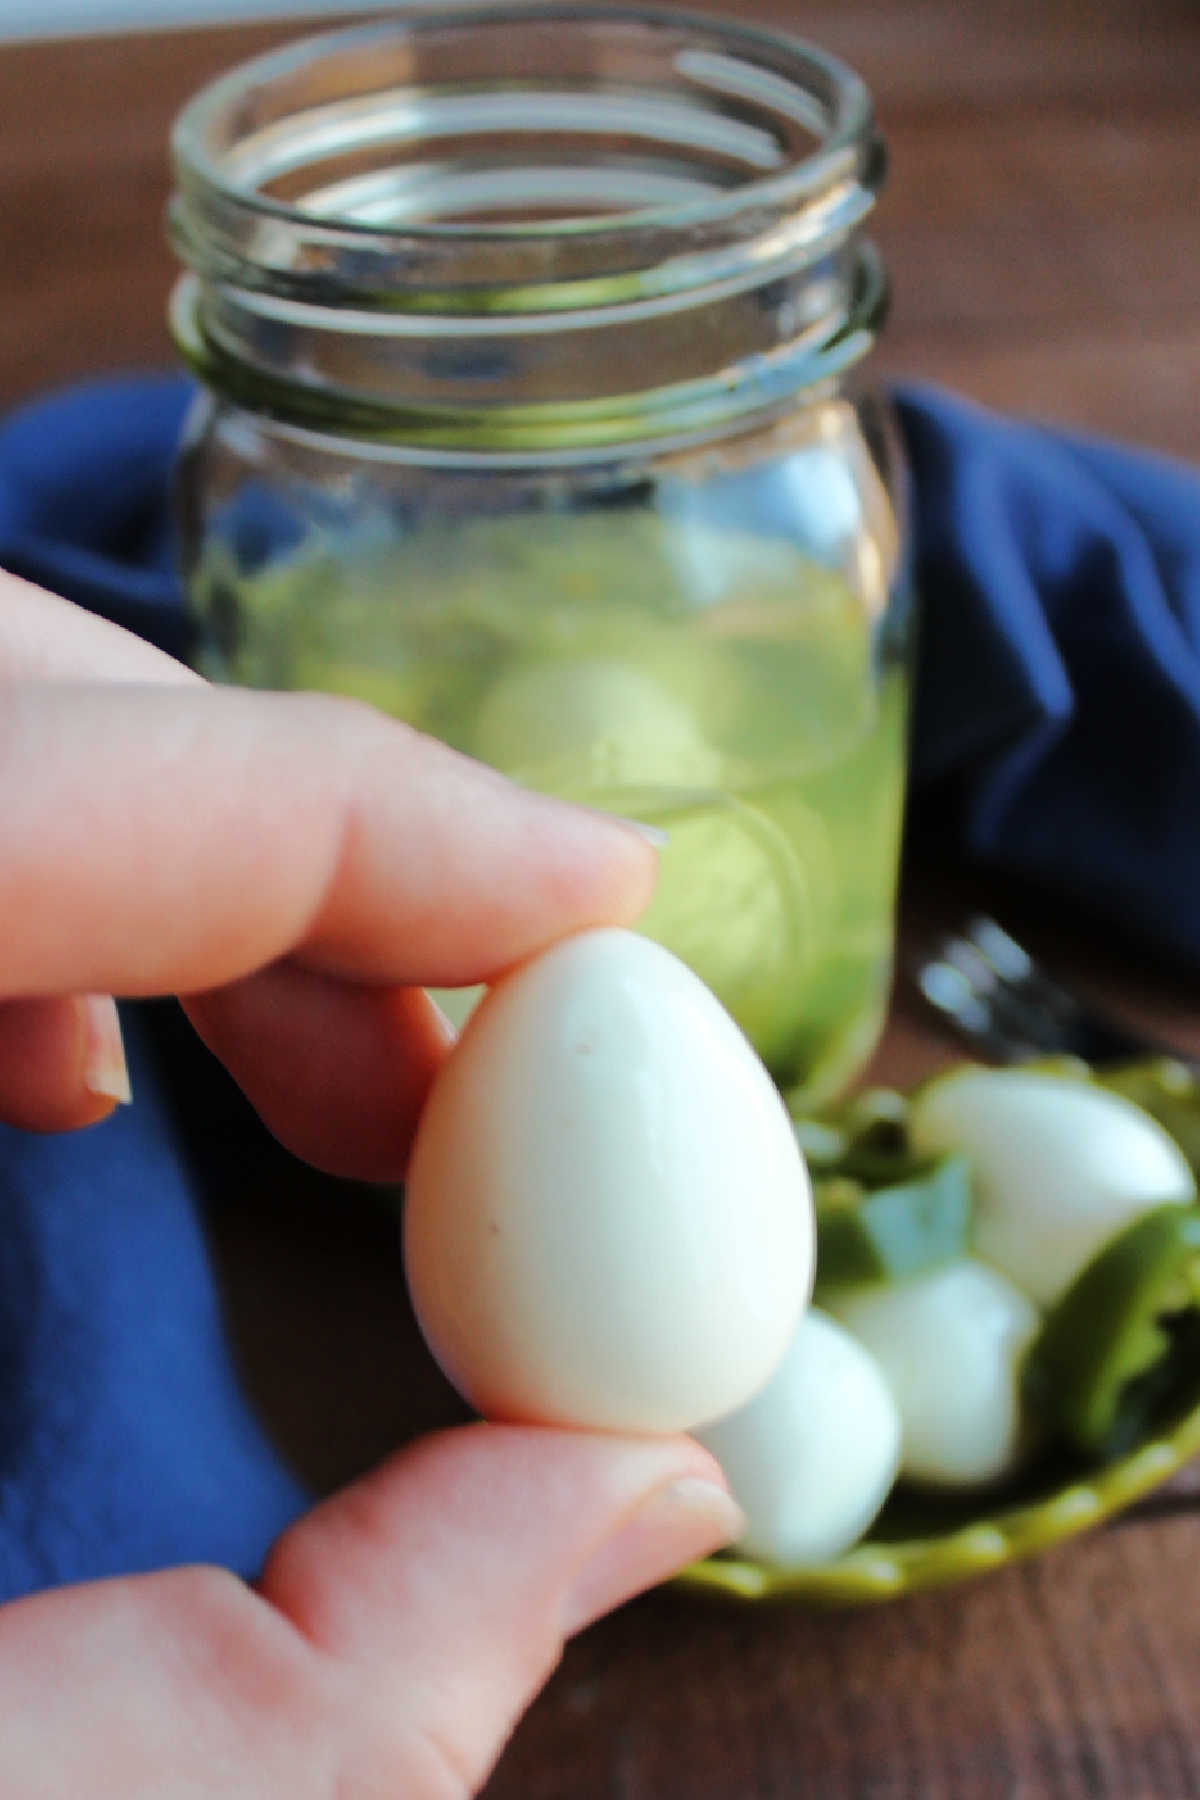 Hand holding small pickled quail egg.